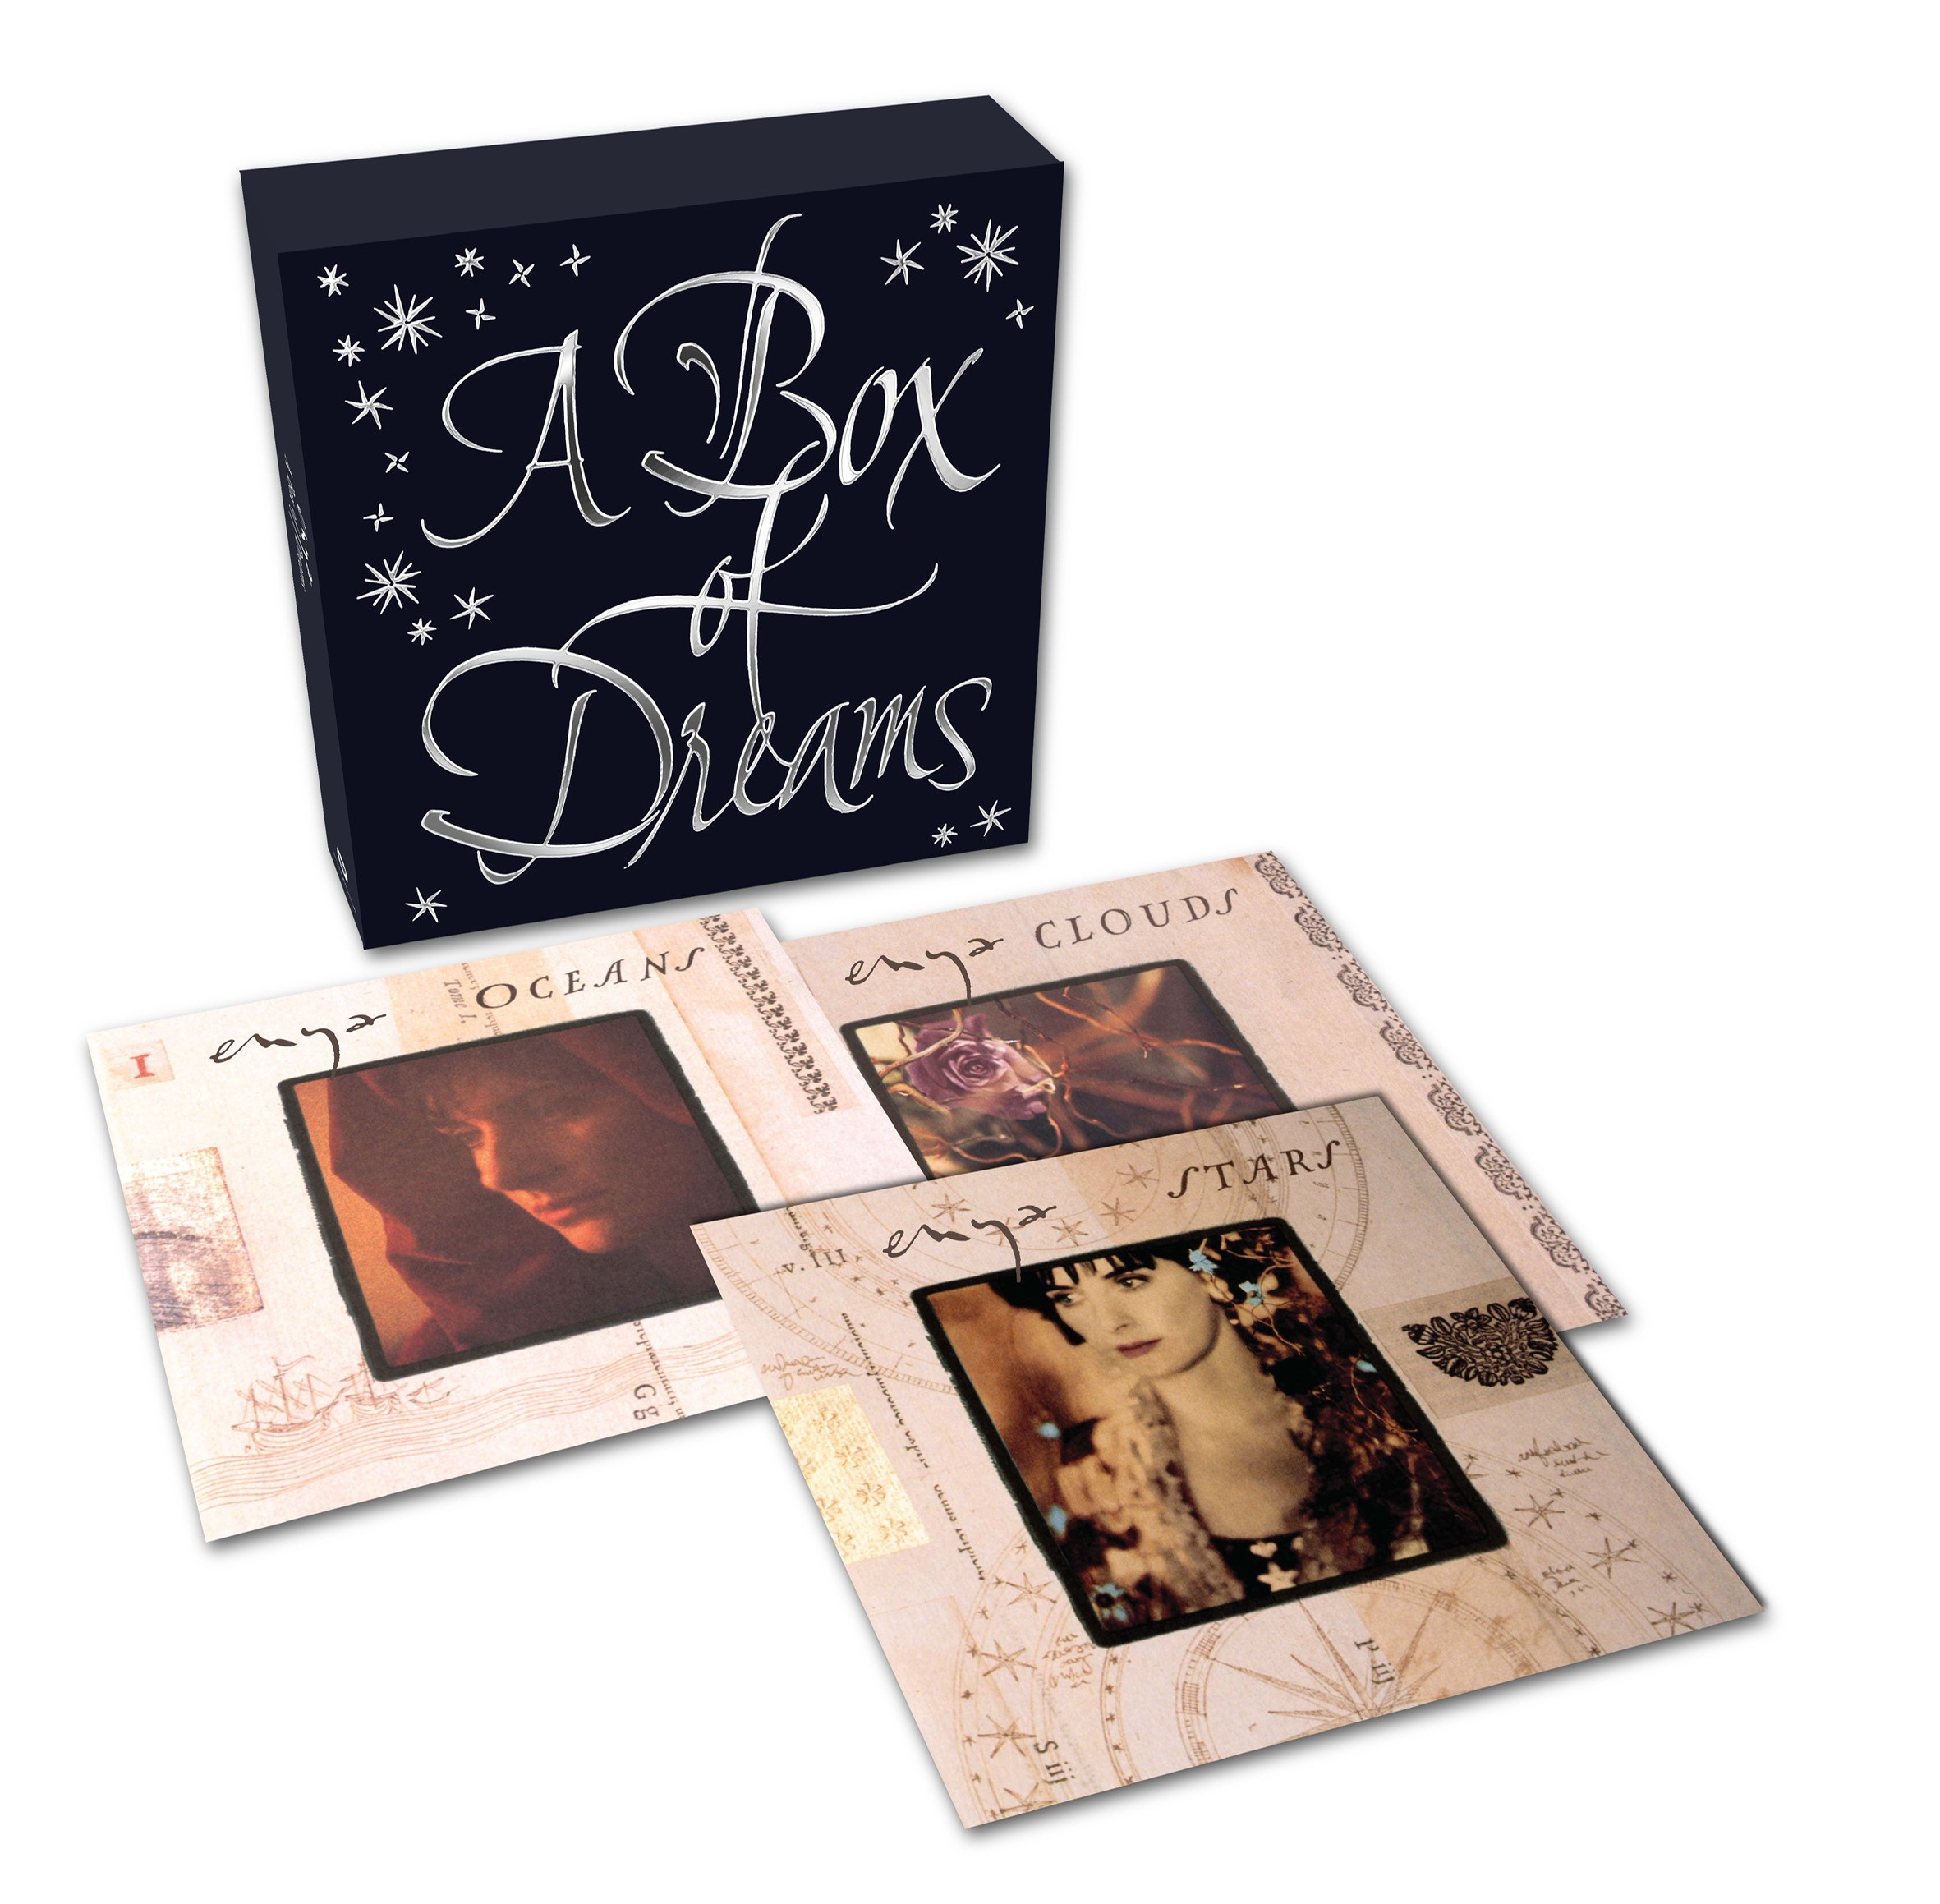 Enya / A Box Full of Dreams 6LP vinyl box